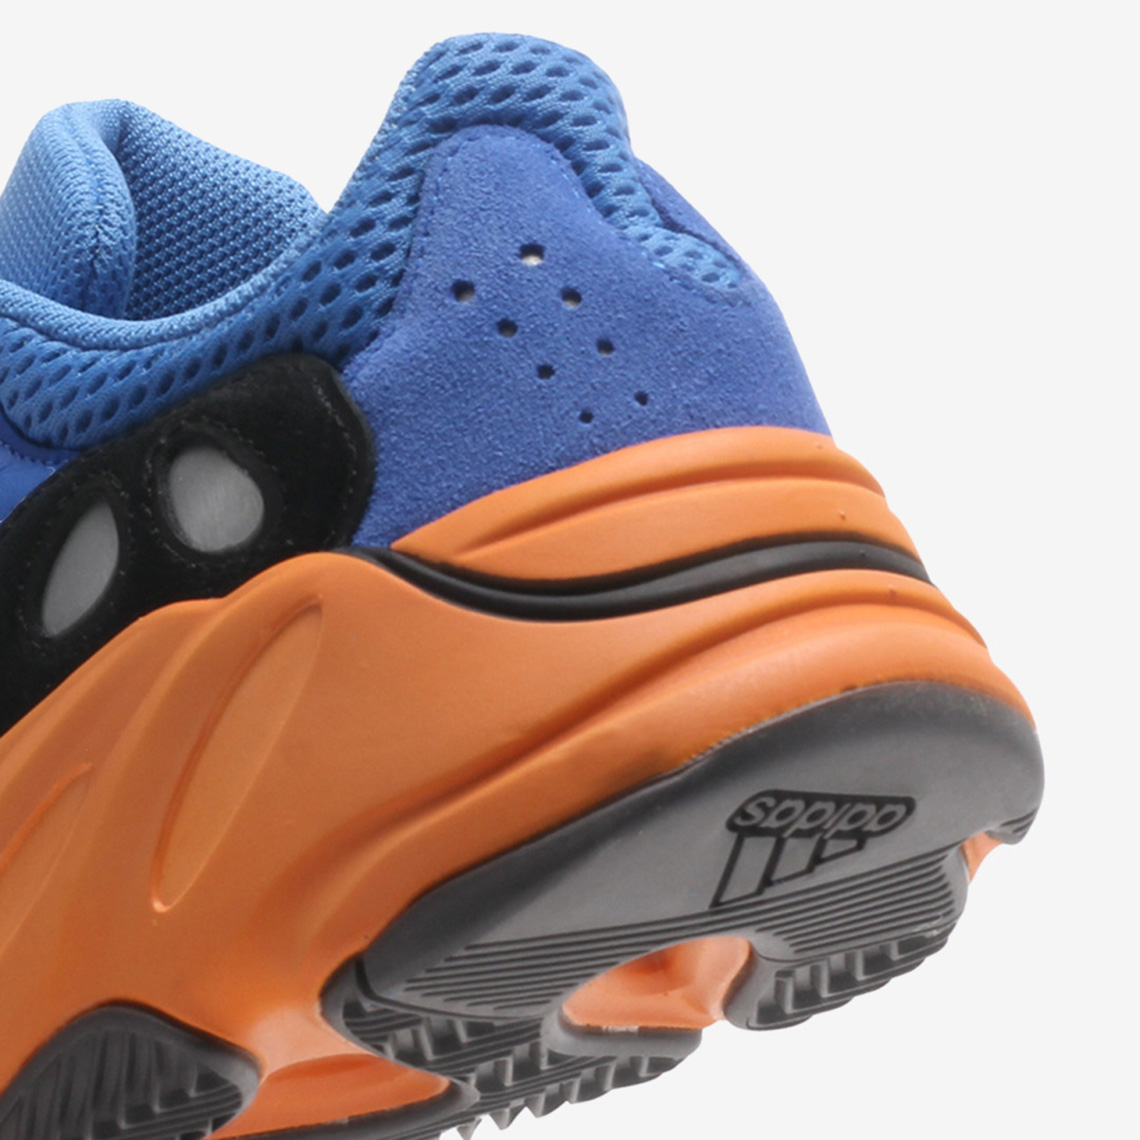 Adidas Yeezy Boost 700 Bright Blue Release Reminder 3